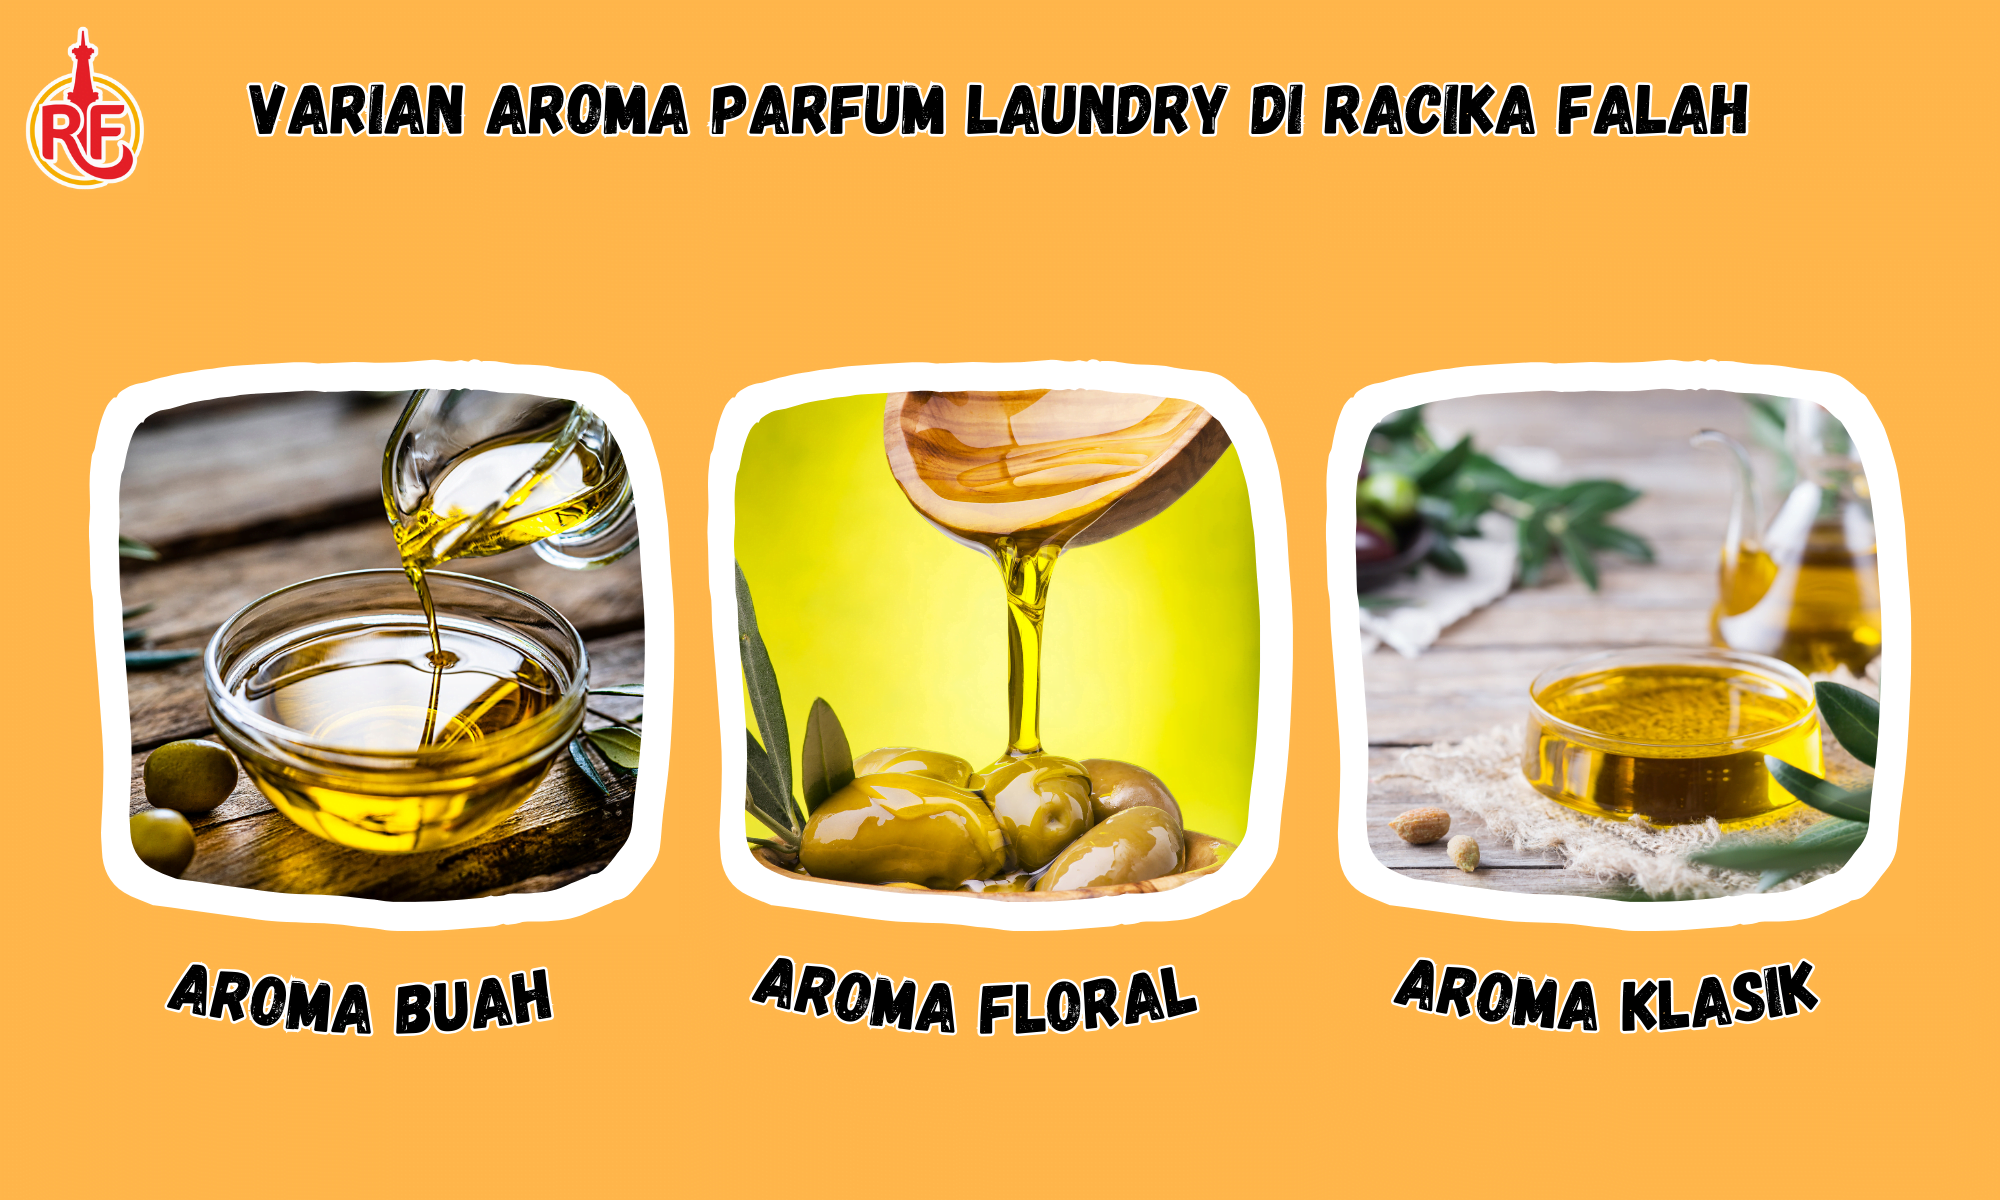 Varian Aroma Parfum Laundry